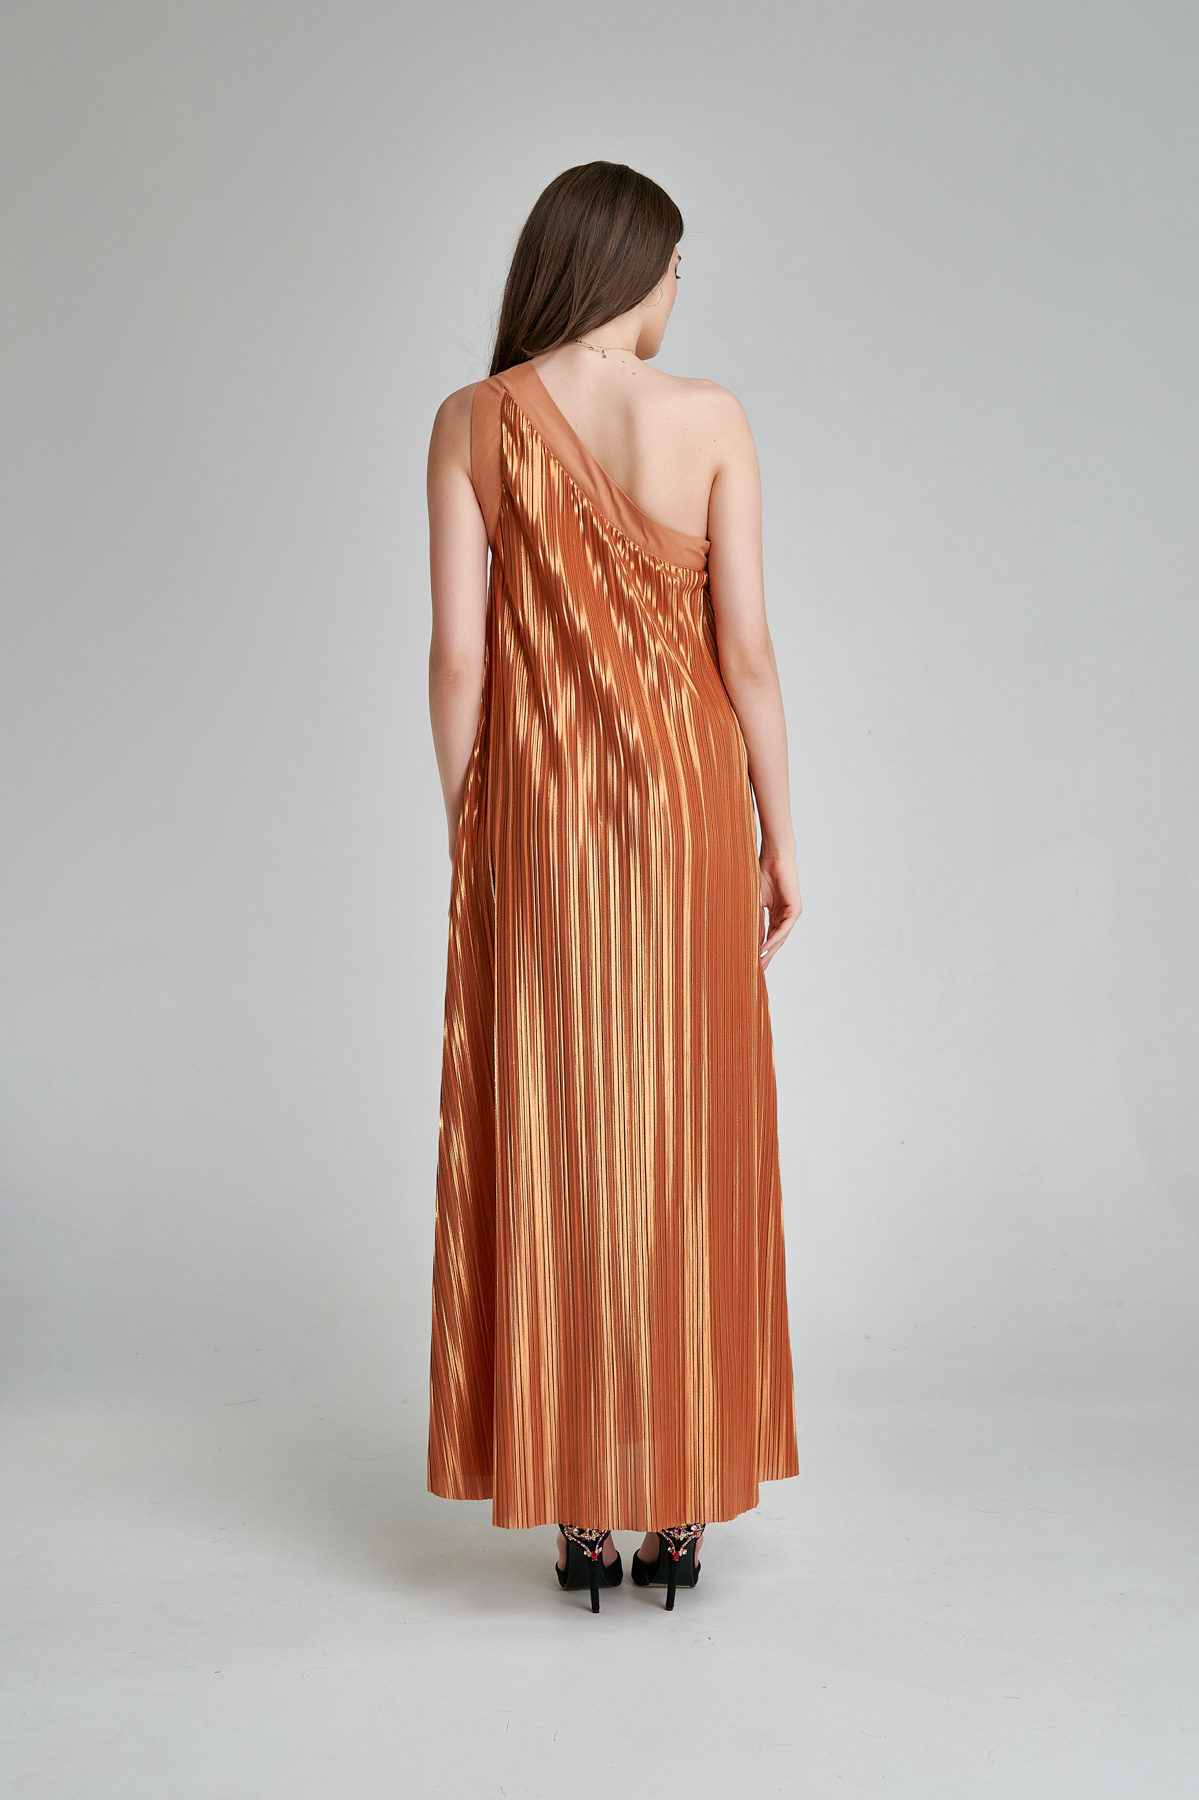 Elegant golden DILMA dress with asymmetrical neckline. Natural fabrics, original design, handmade embroidery